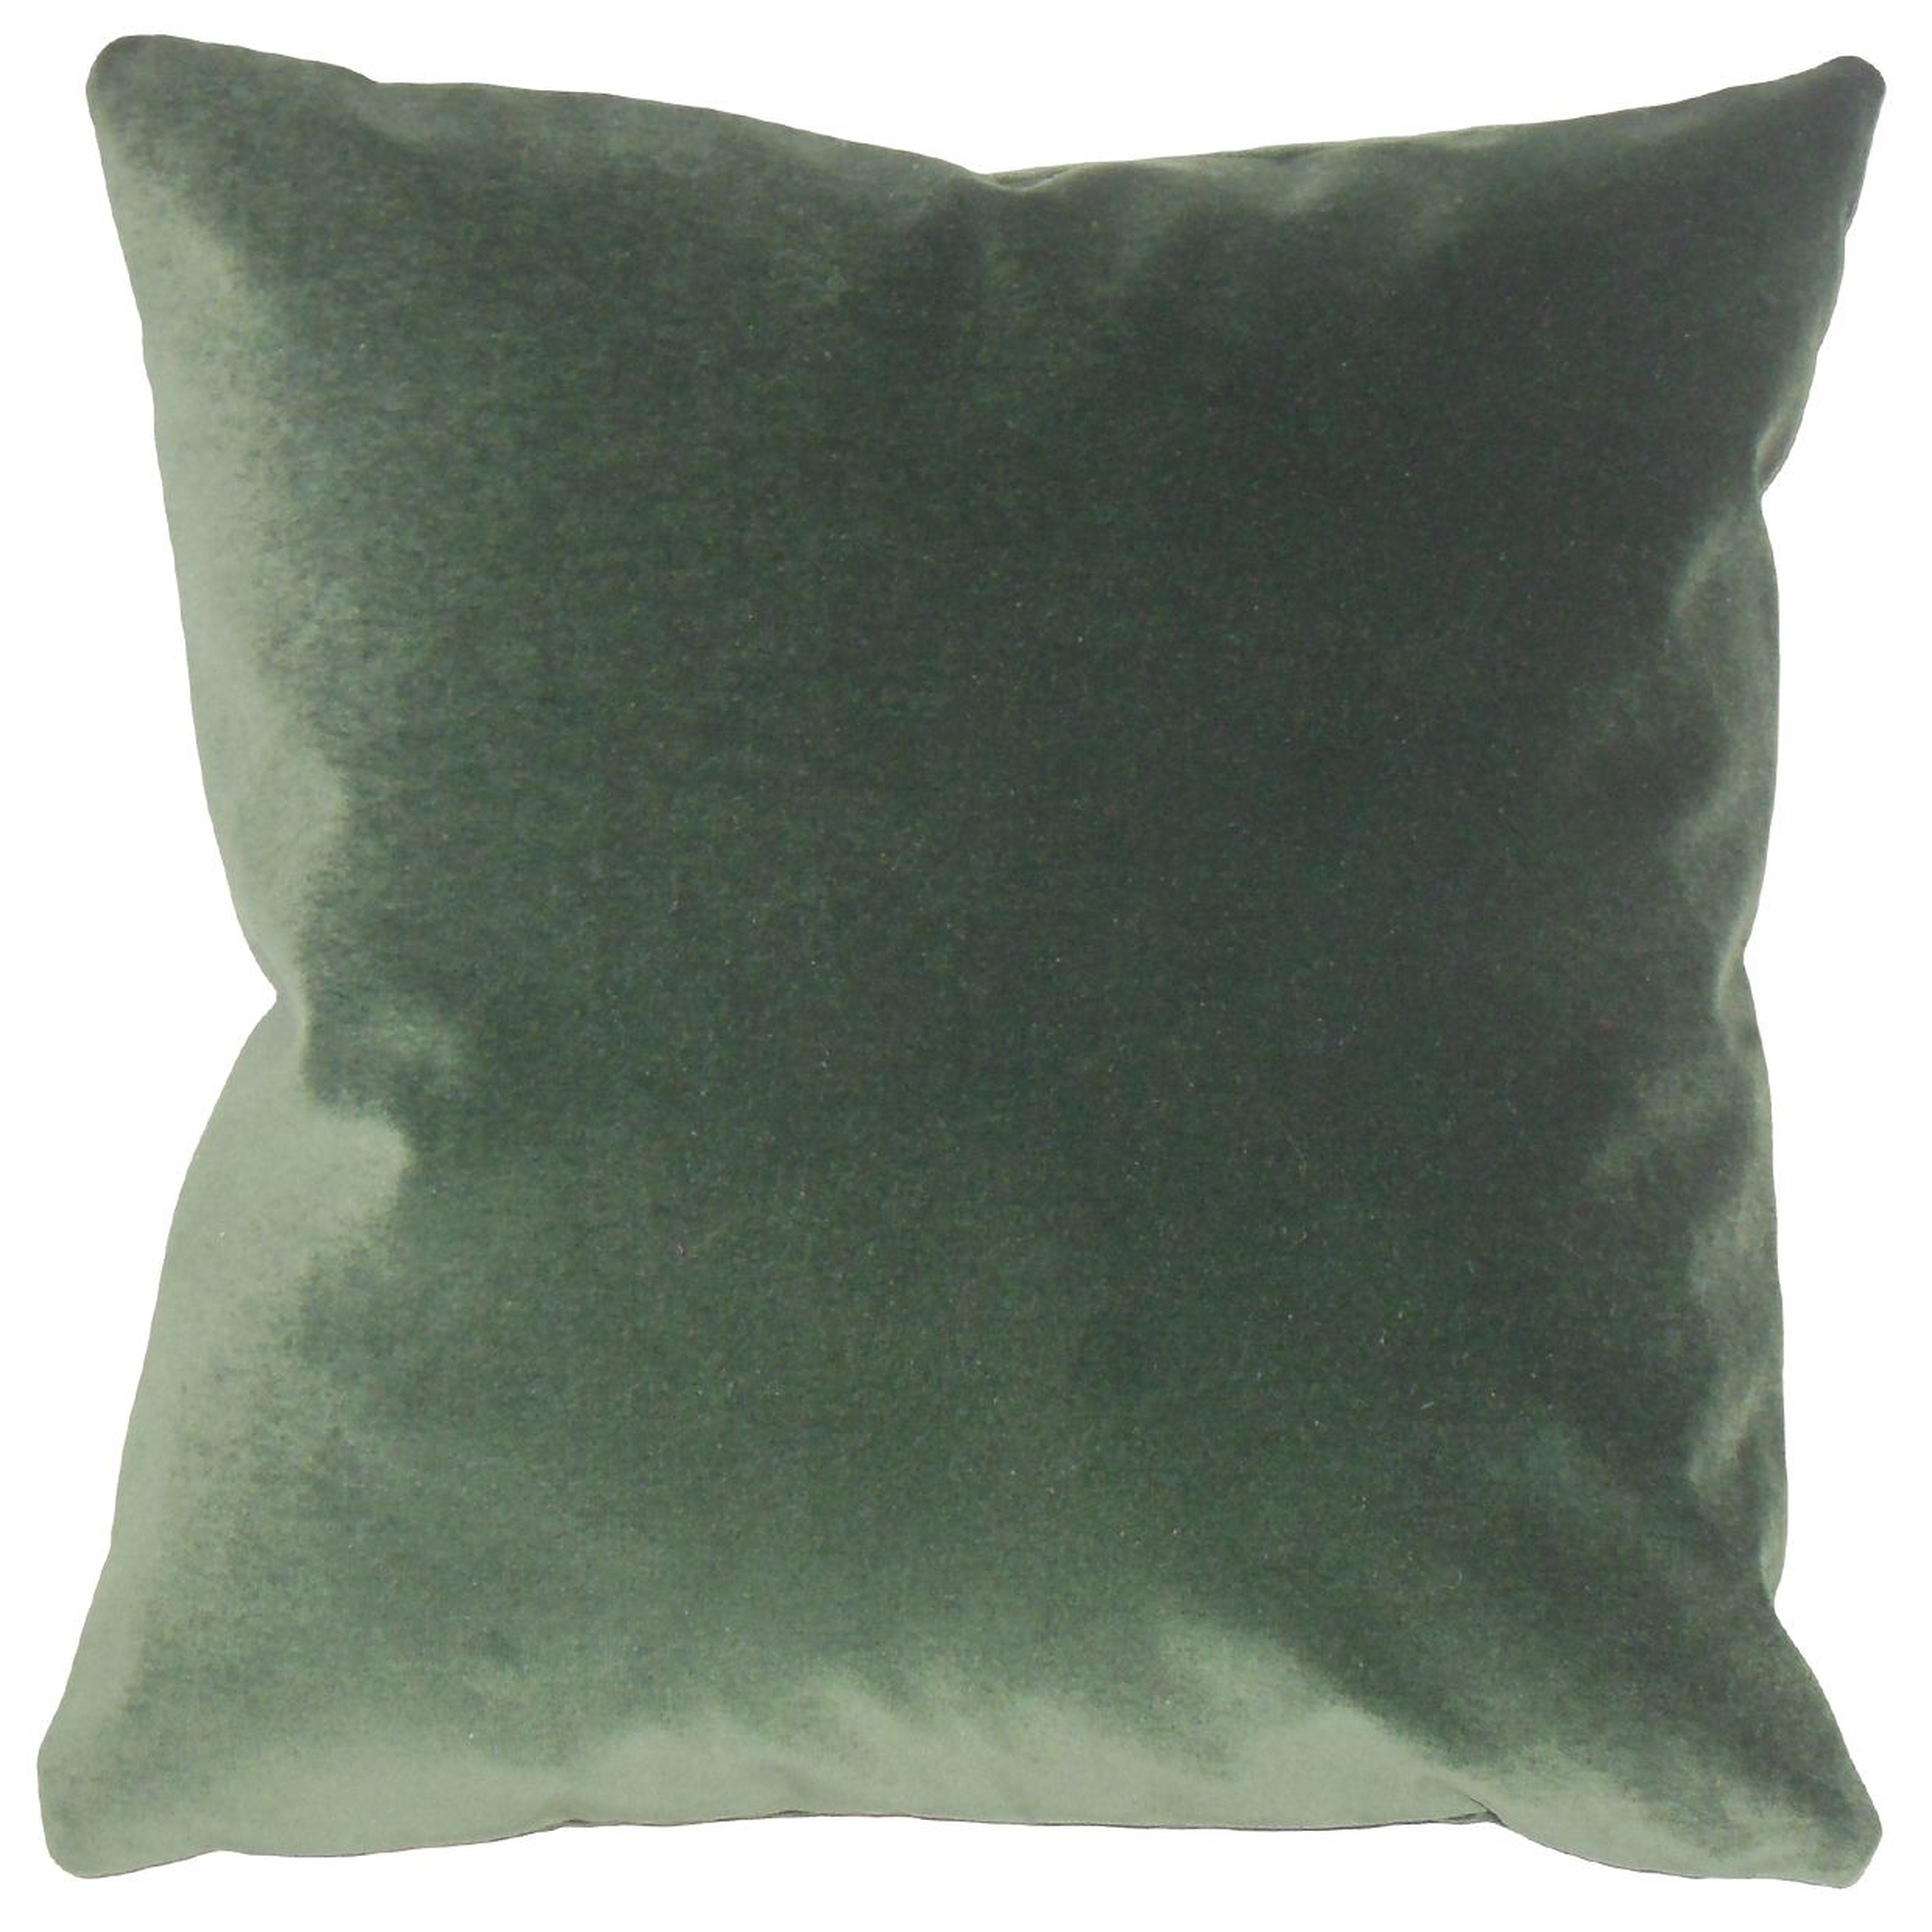 Classic Velvet Pillow, Green, 18" x 18", Down insert - Havenly Essentials